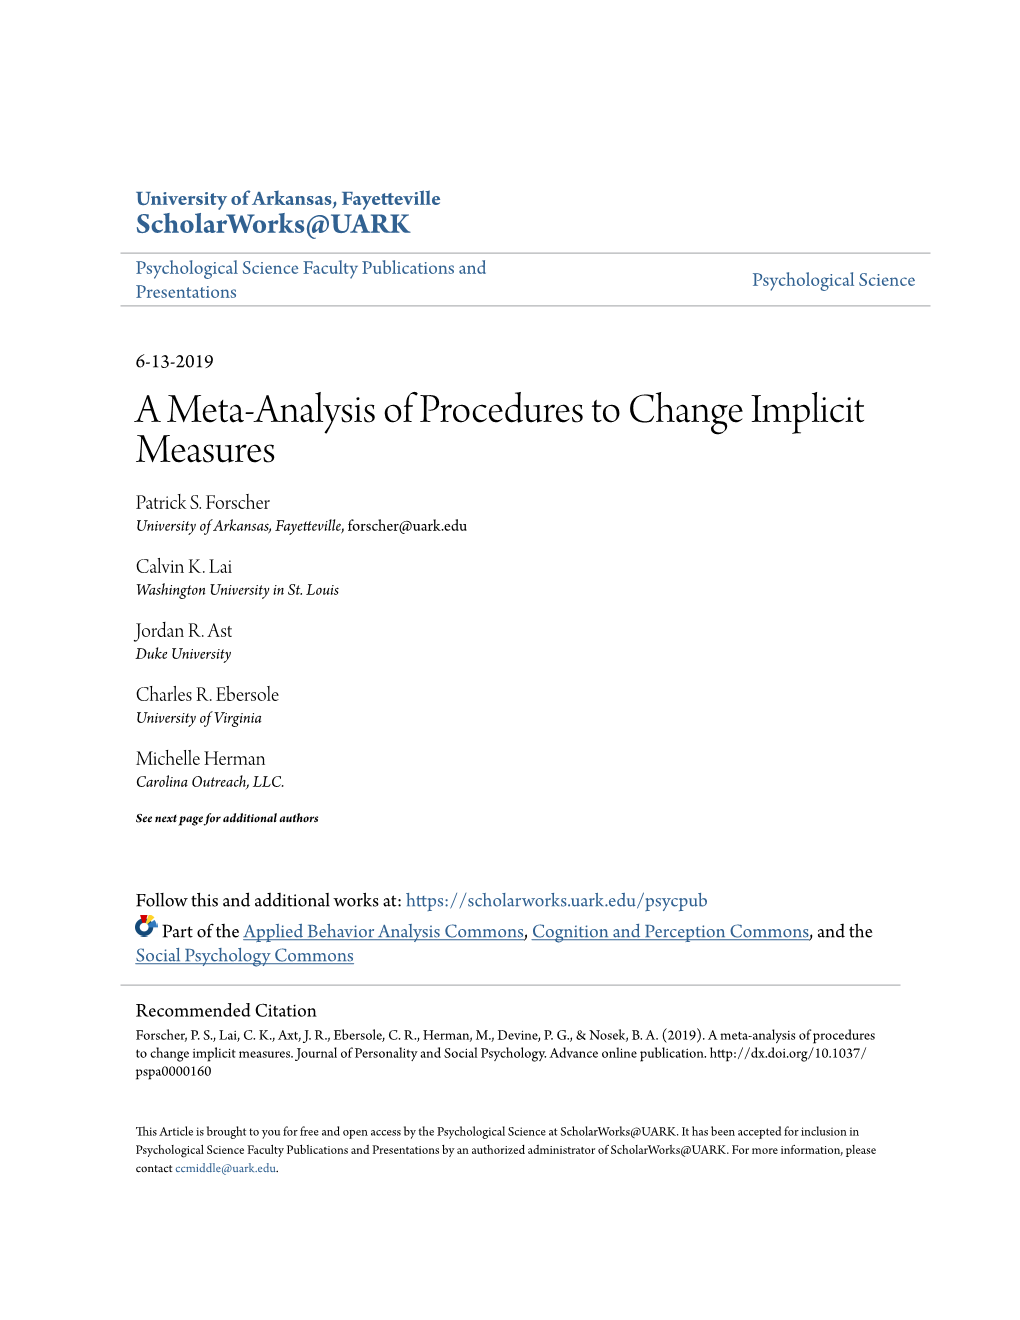 A Meta-Analysis of Procedures to Change Implicit Measures Patrick S